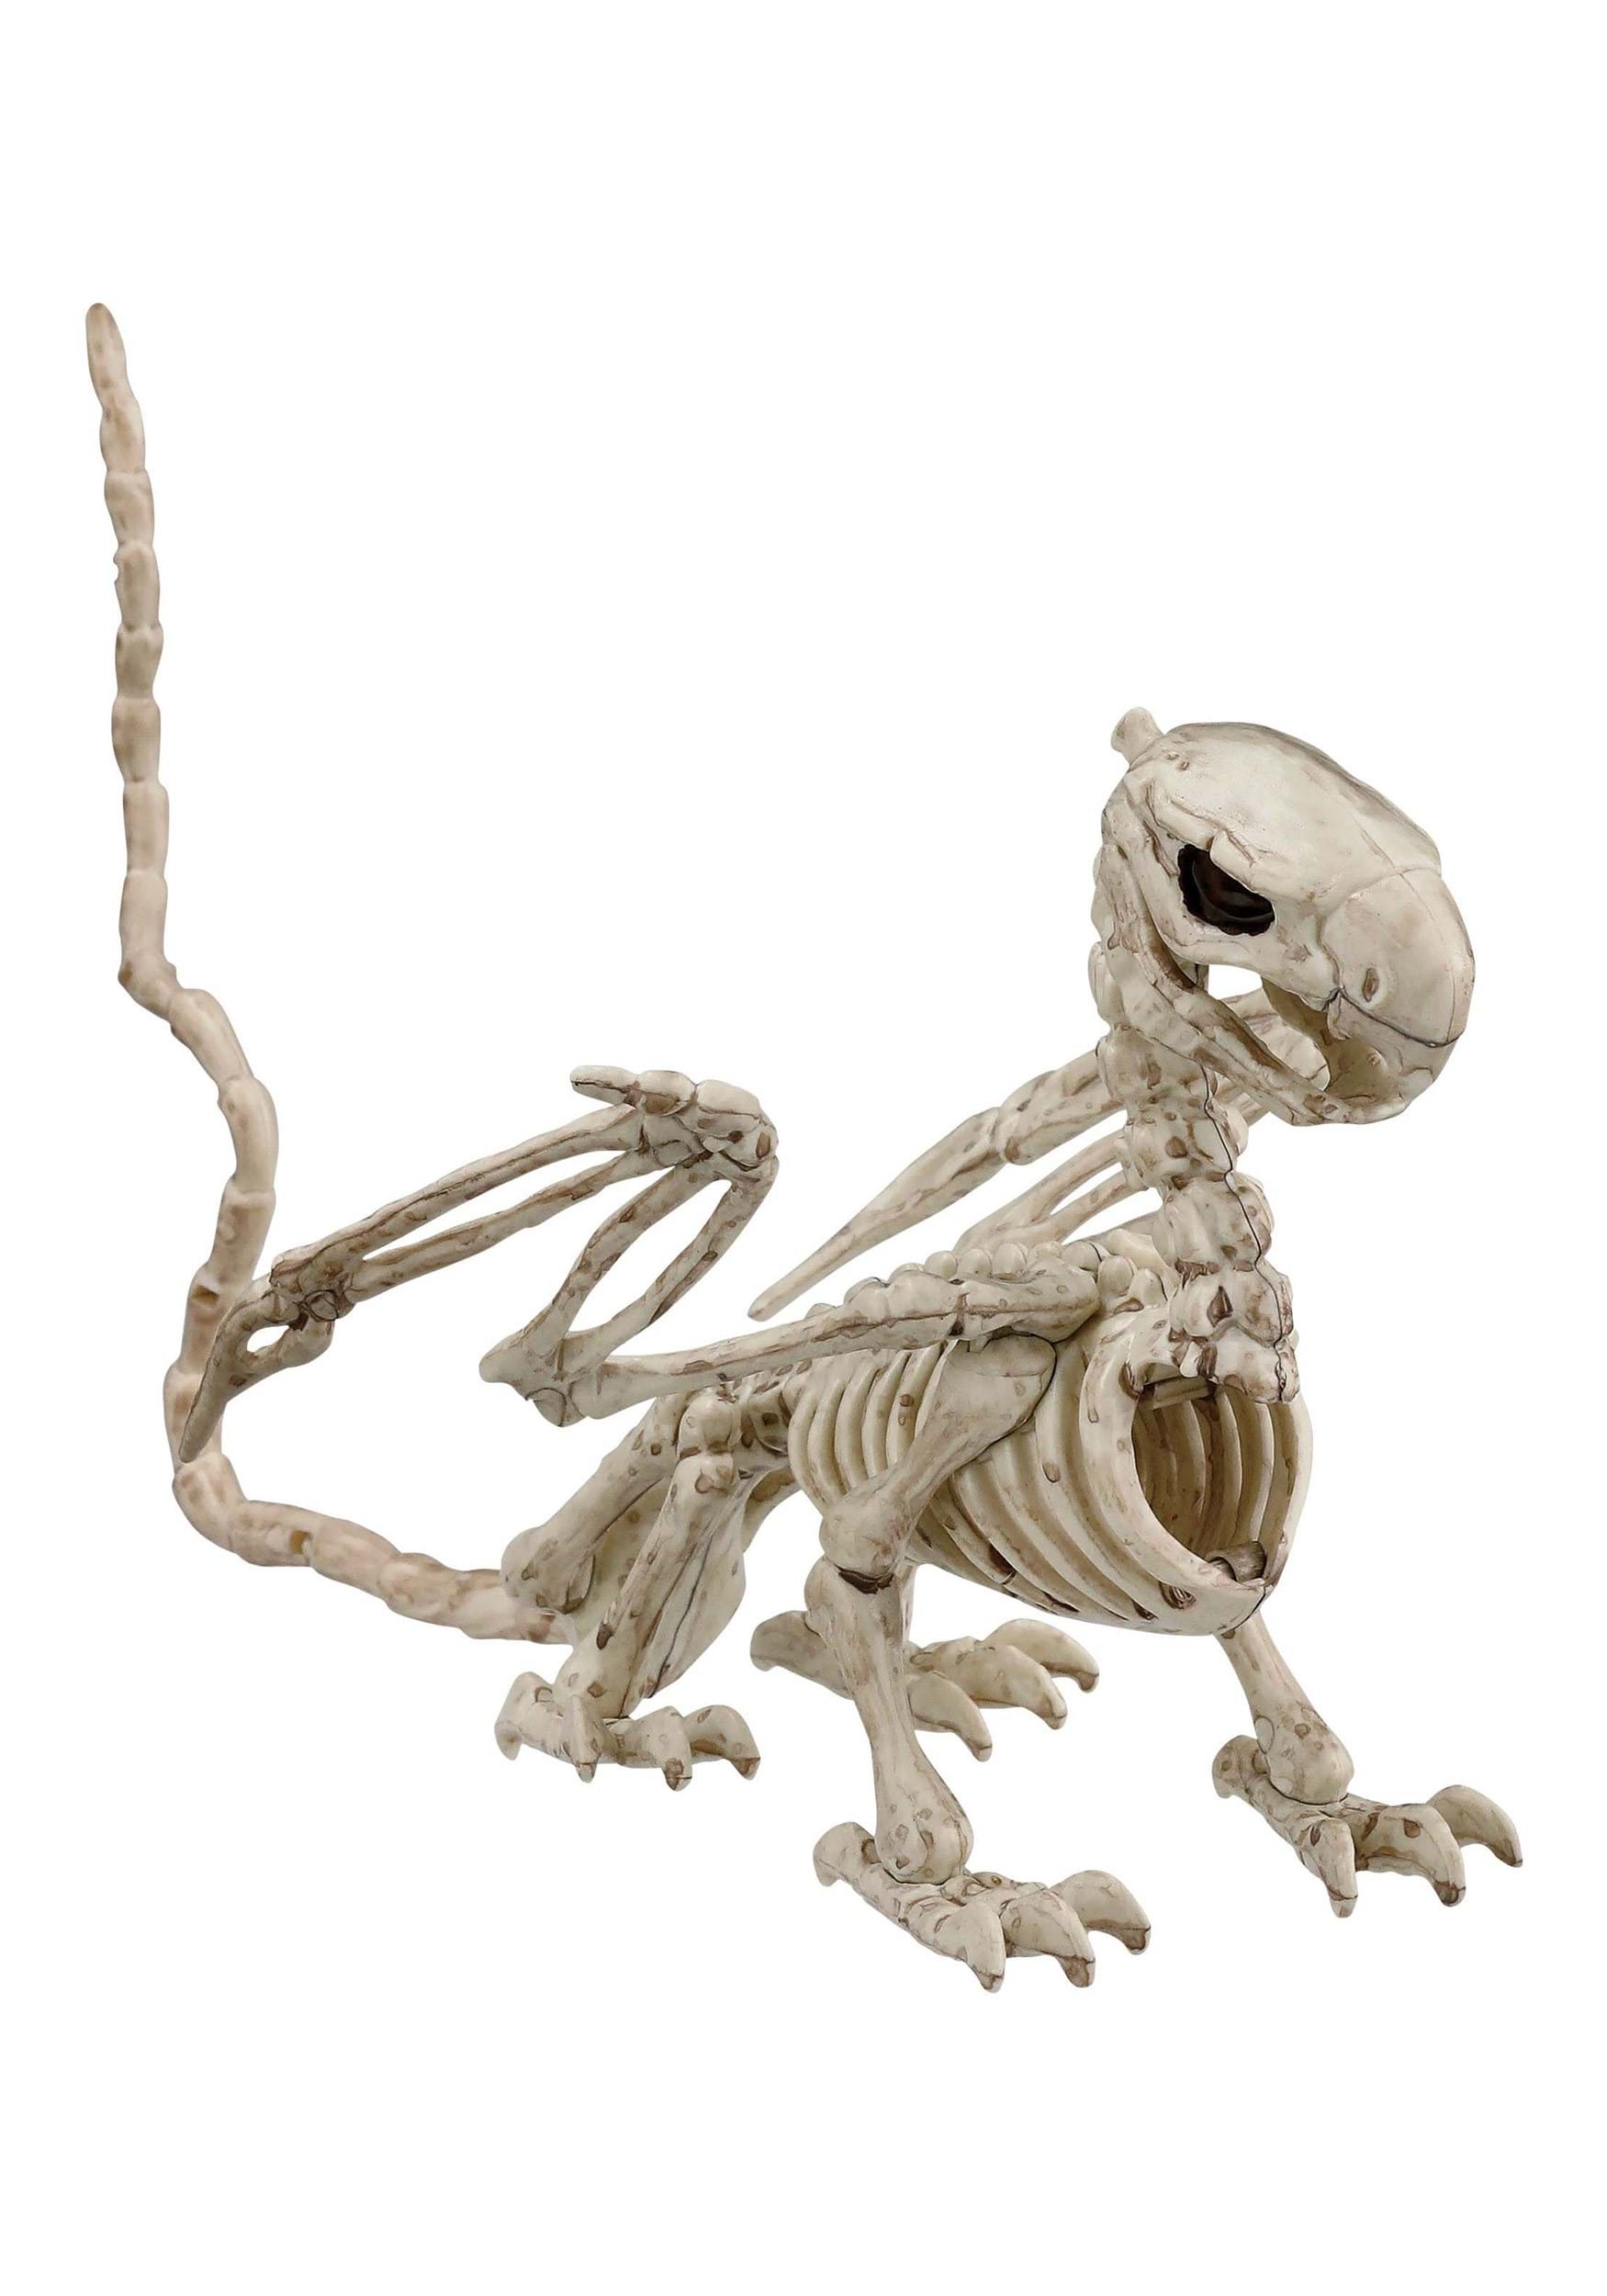 5.5 Inch Griffin Skeleton Decoration